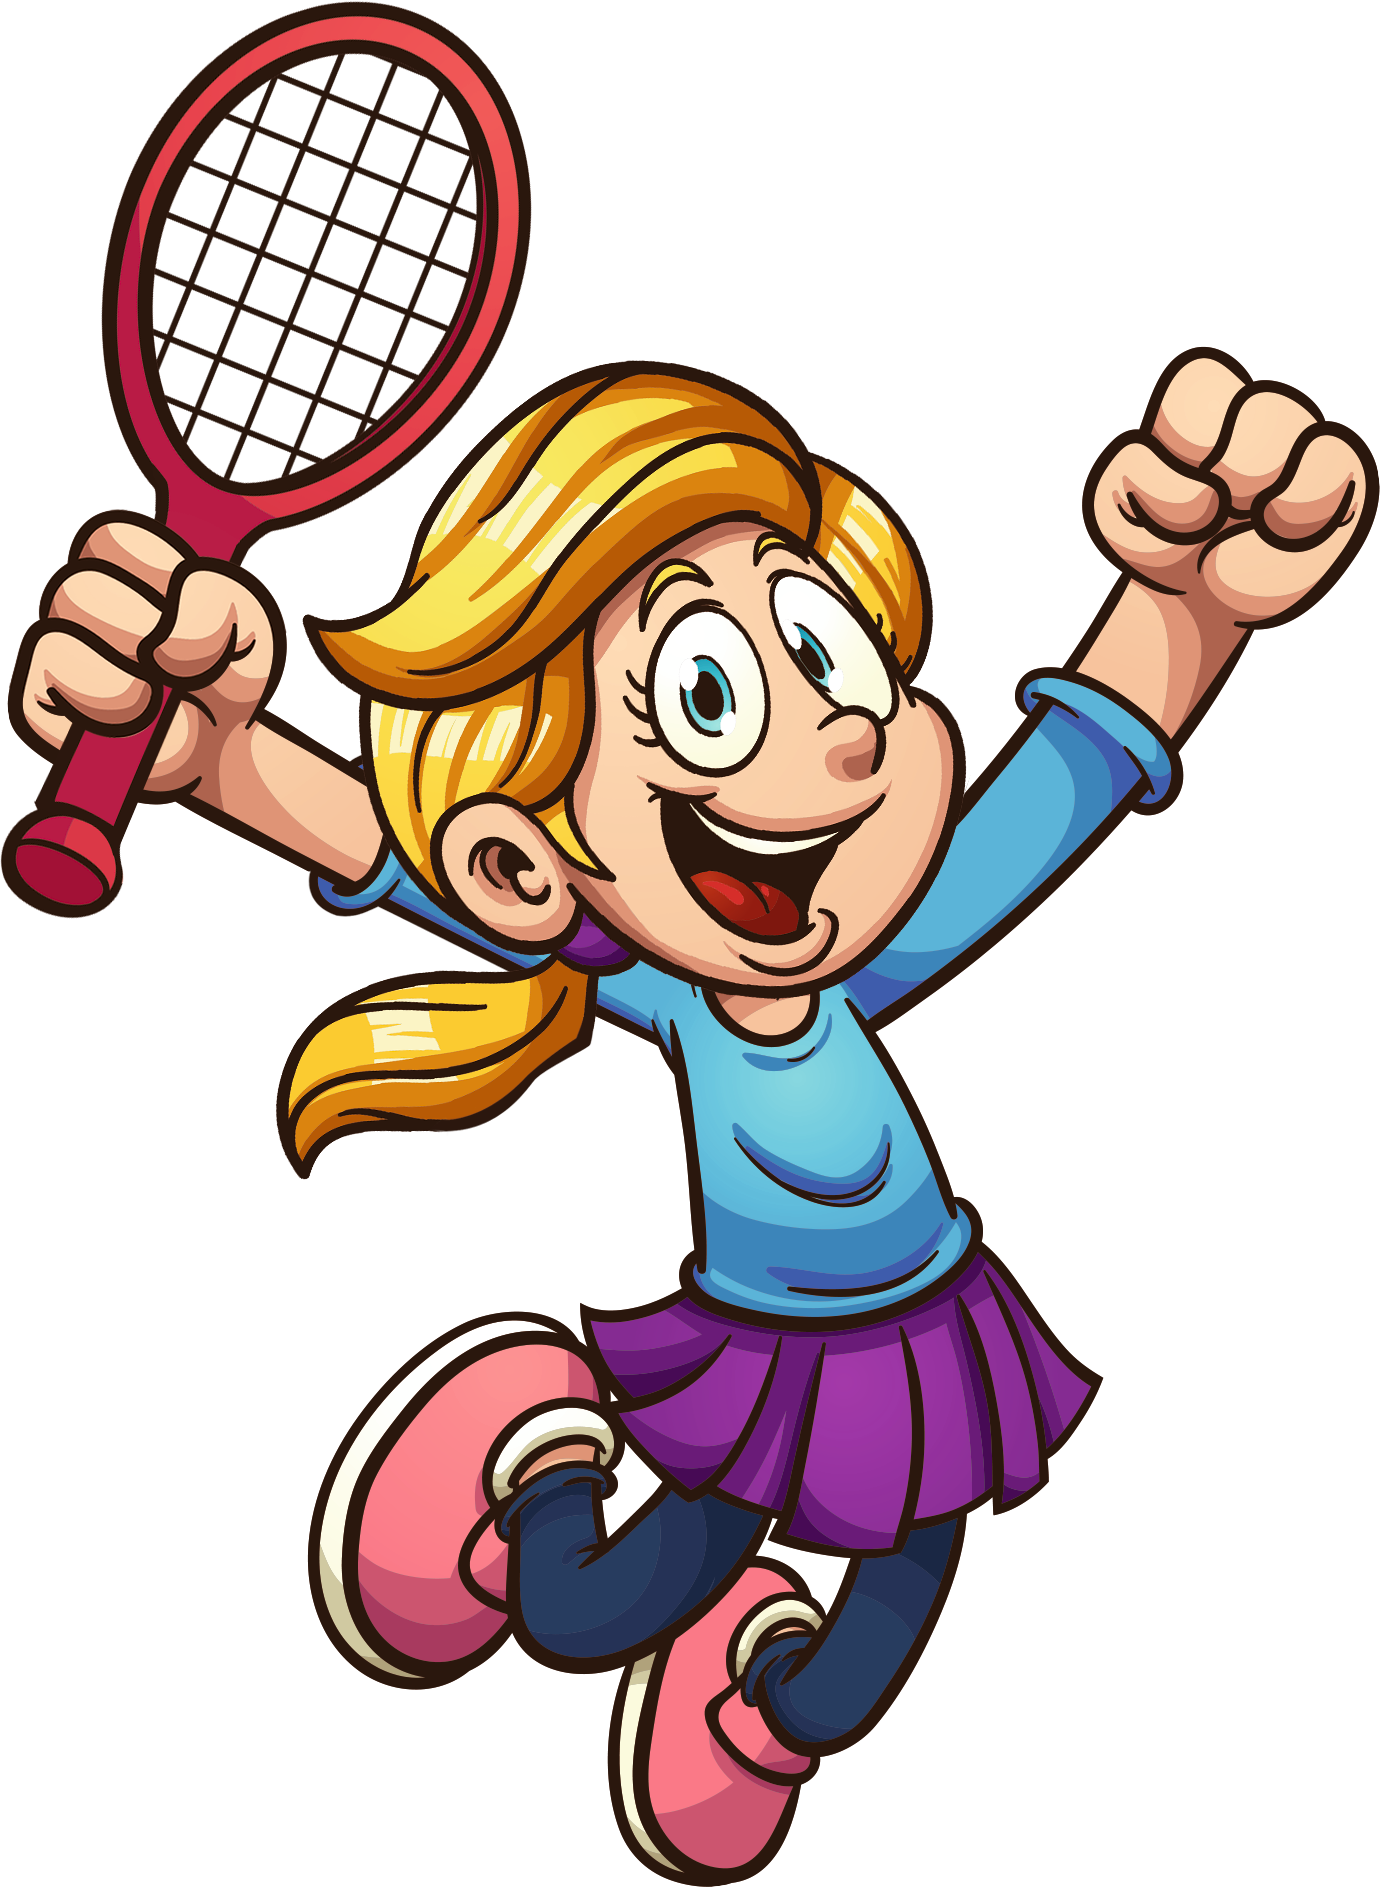 Школа тенниса для детей